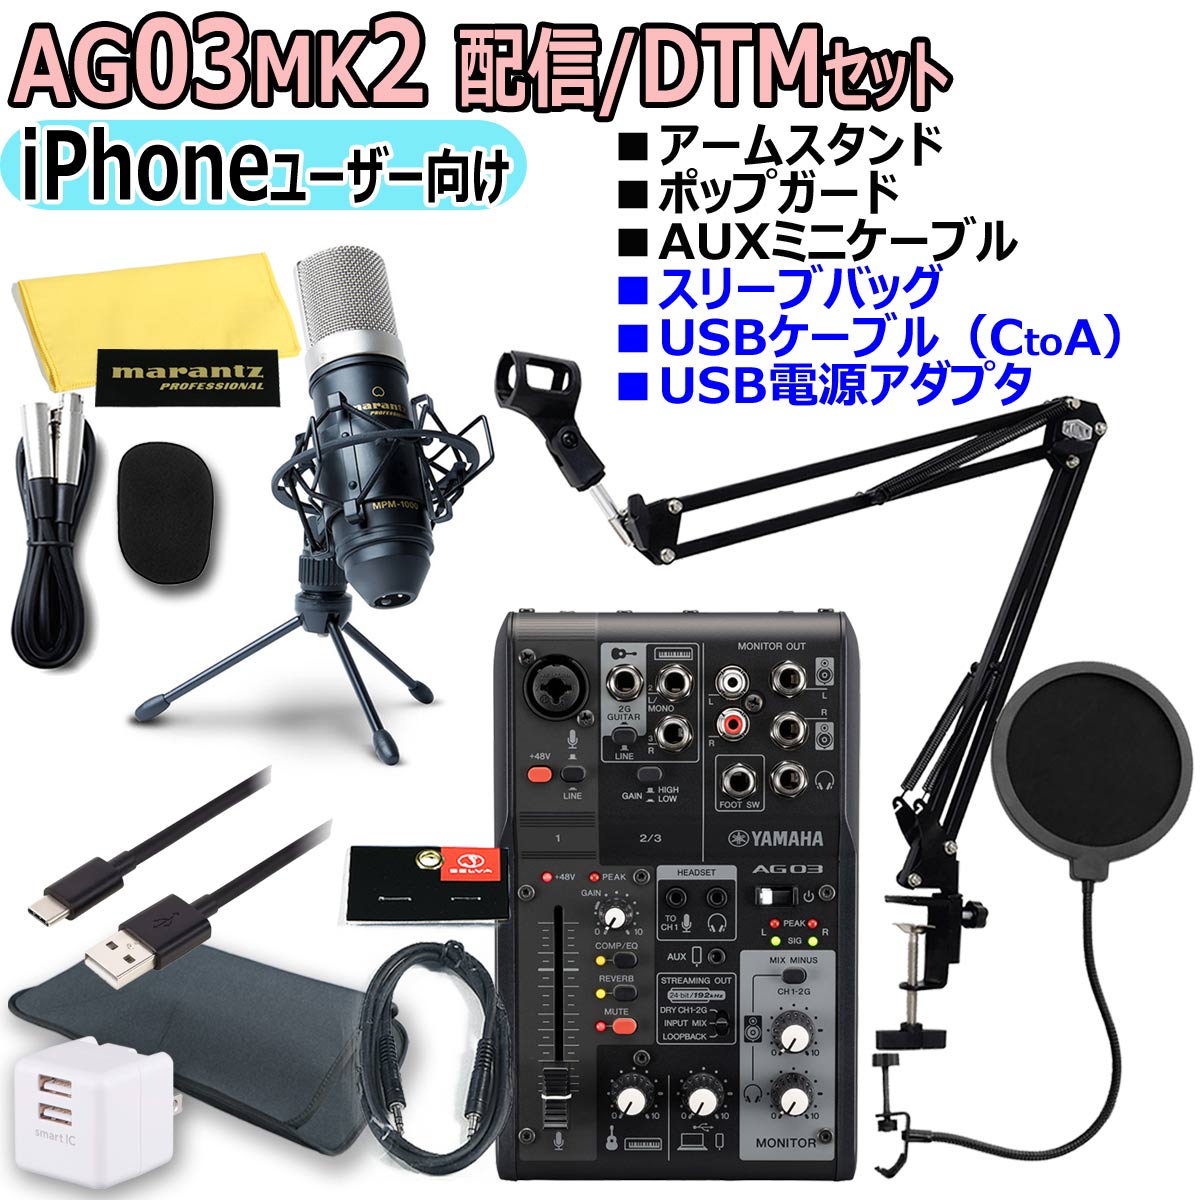 YAMAHA AG03MK2 BLACK iPhoneユーザー向け 配信/DTMセット【アウトレット品】 イシバシ楽器